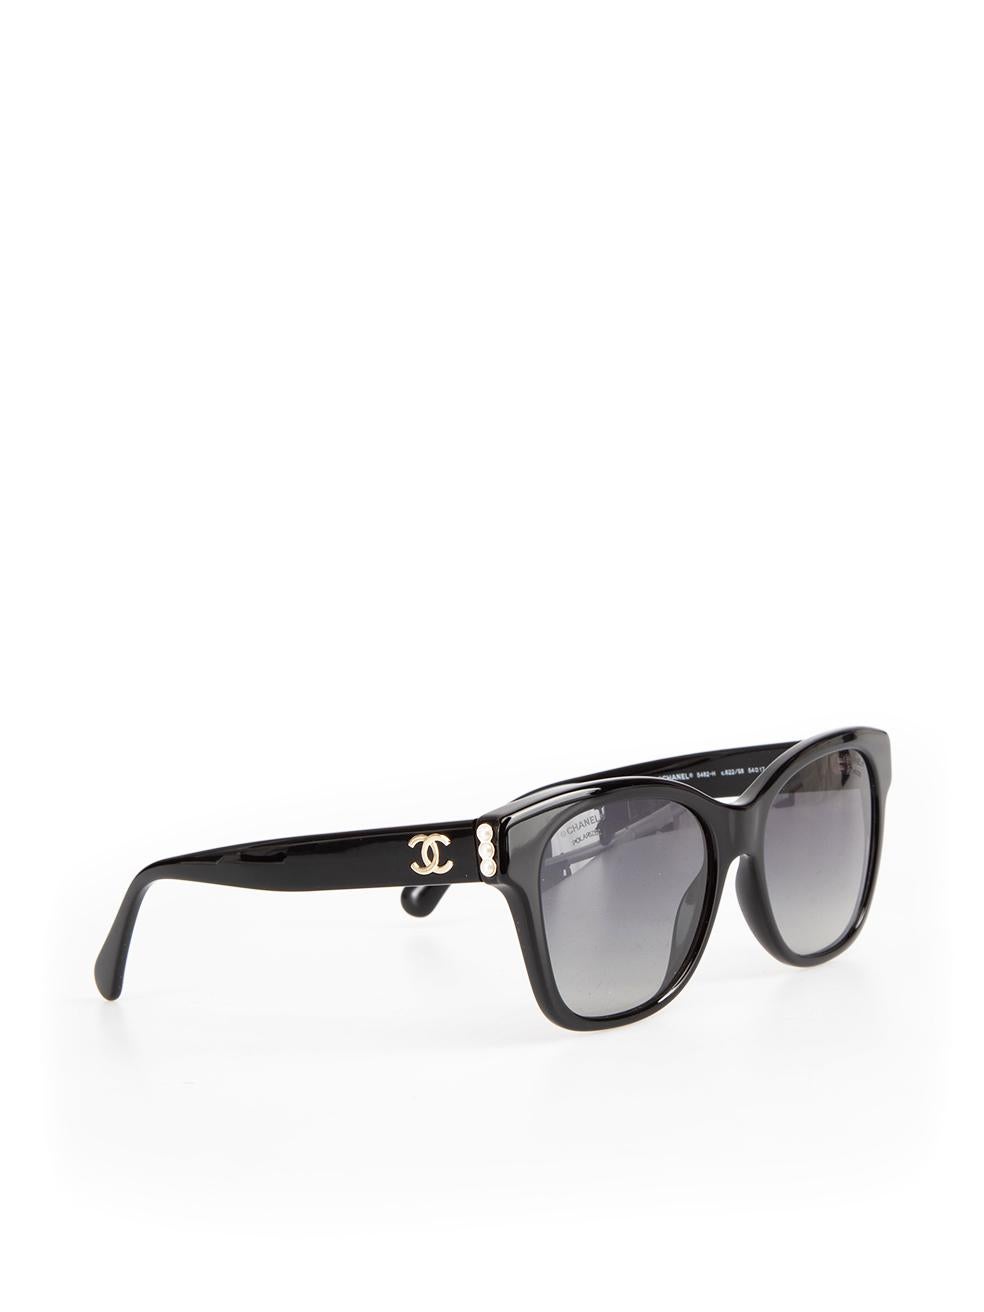 Chanel Black Square Wayfarer Sunglasses In New Condition For Sale In London, GB